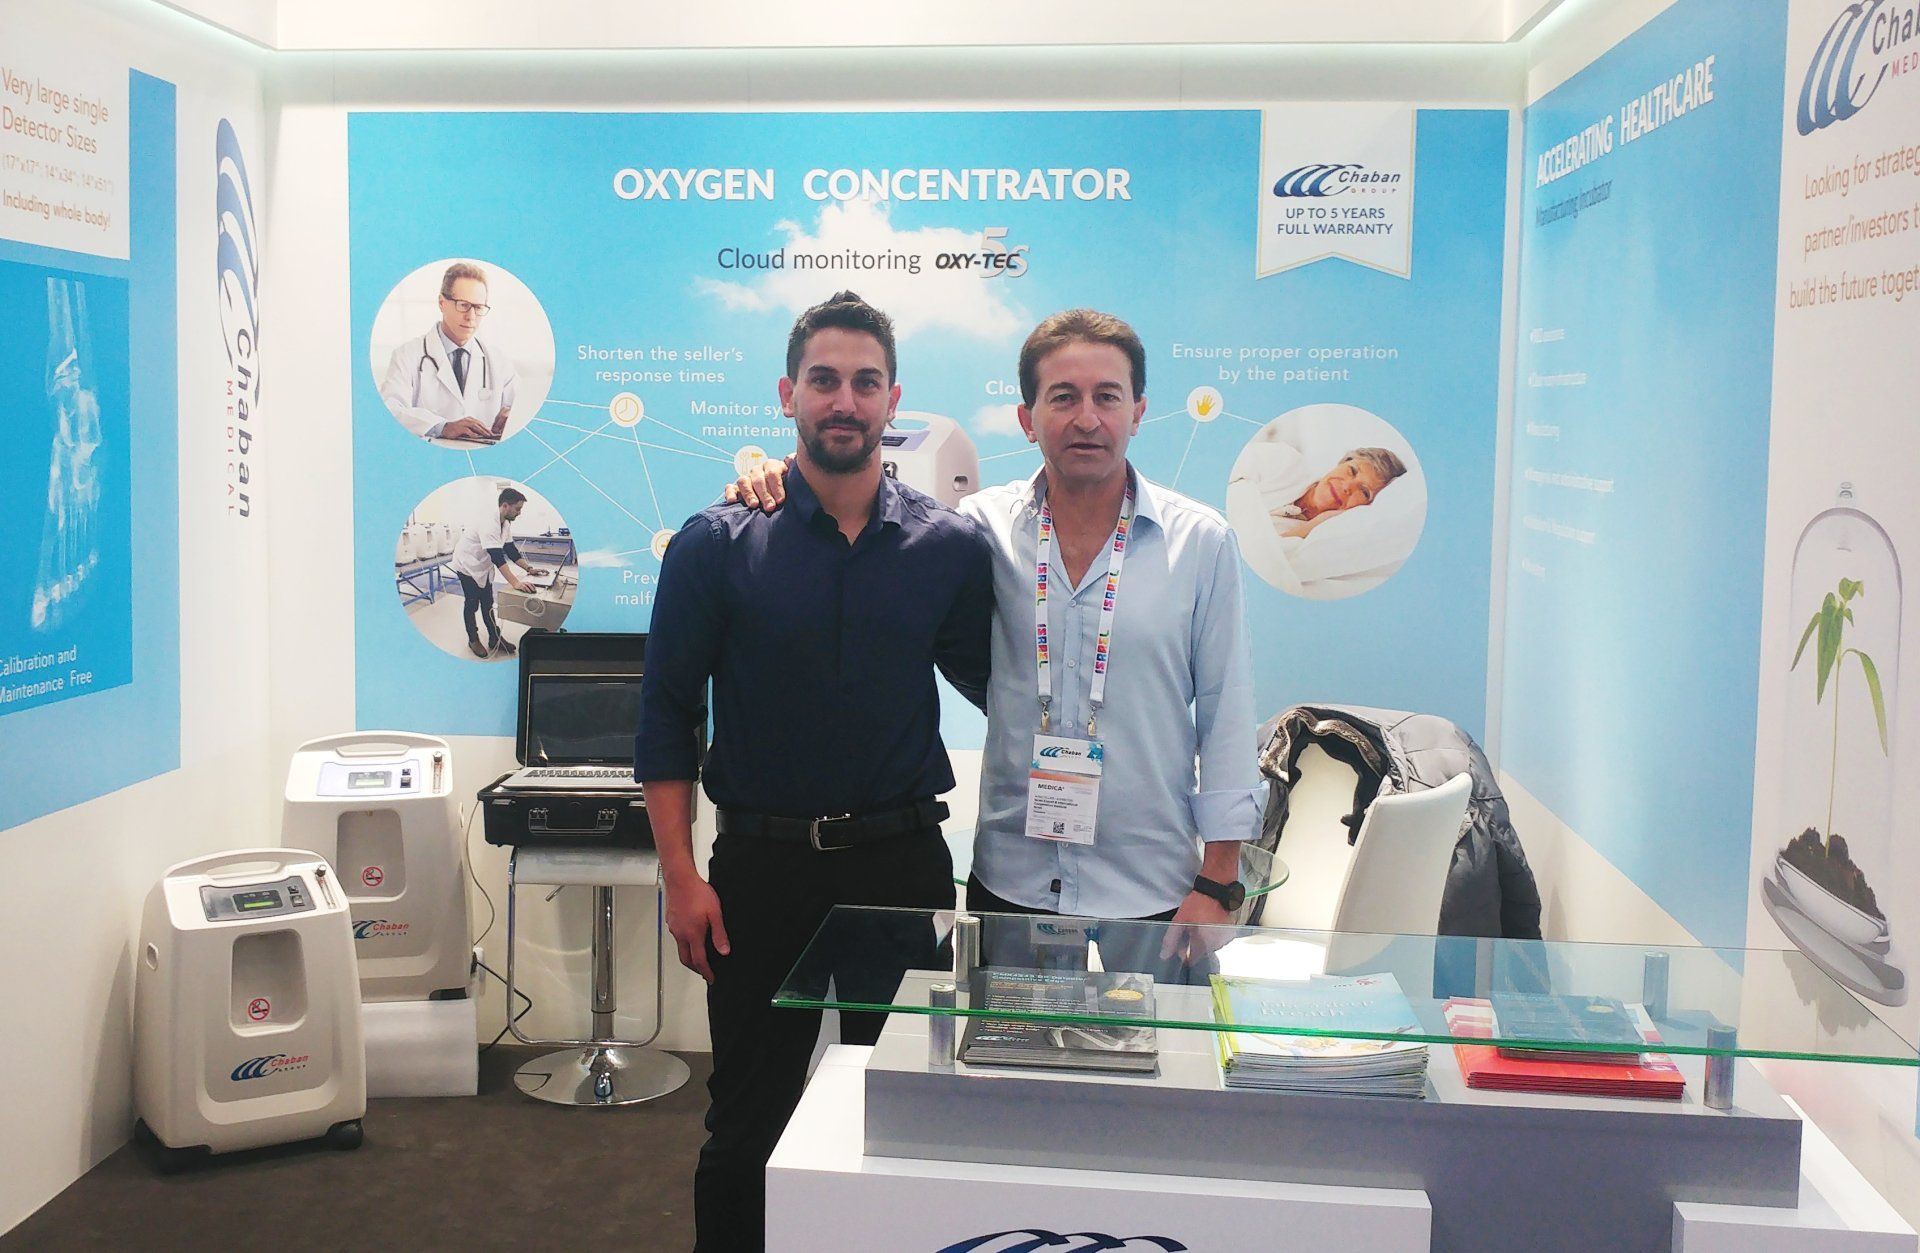 Chaban international medical device distributor